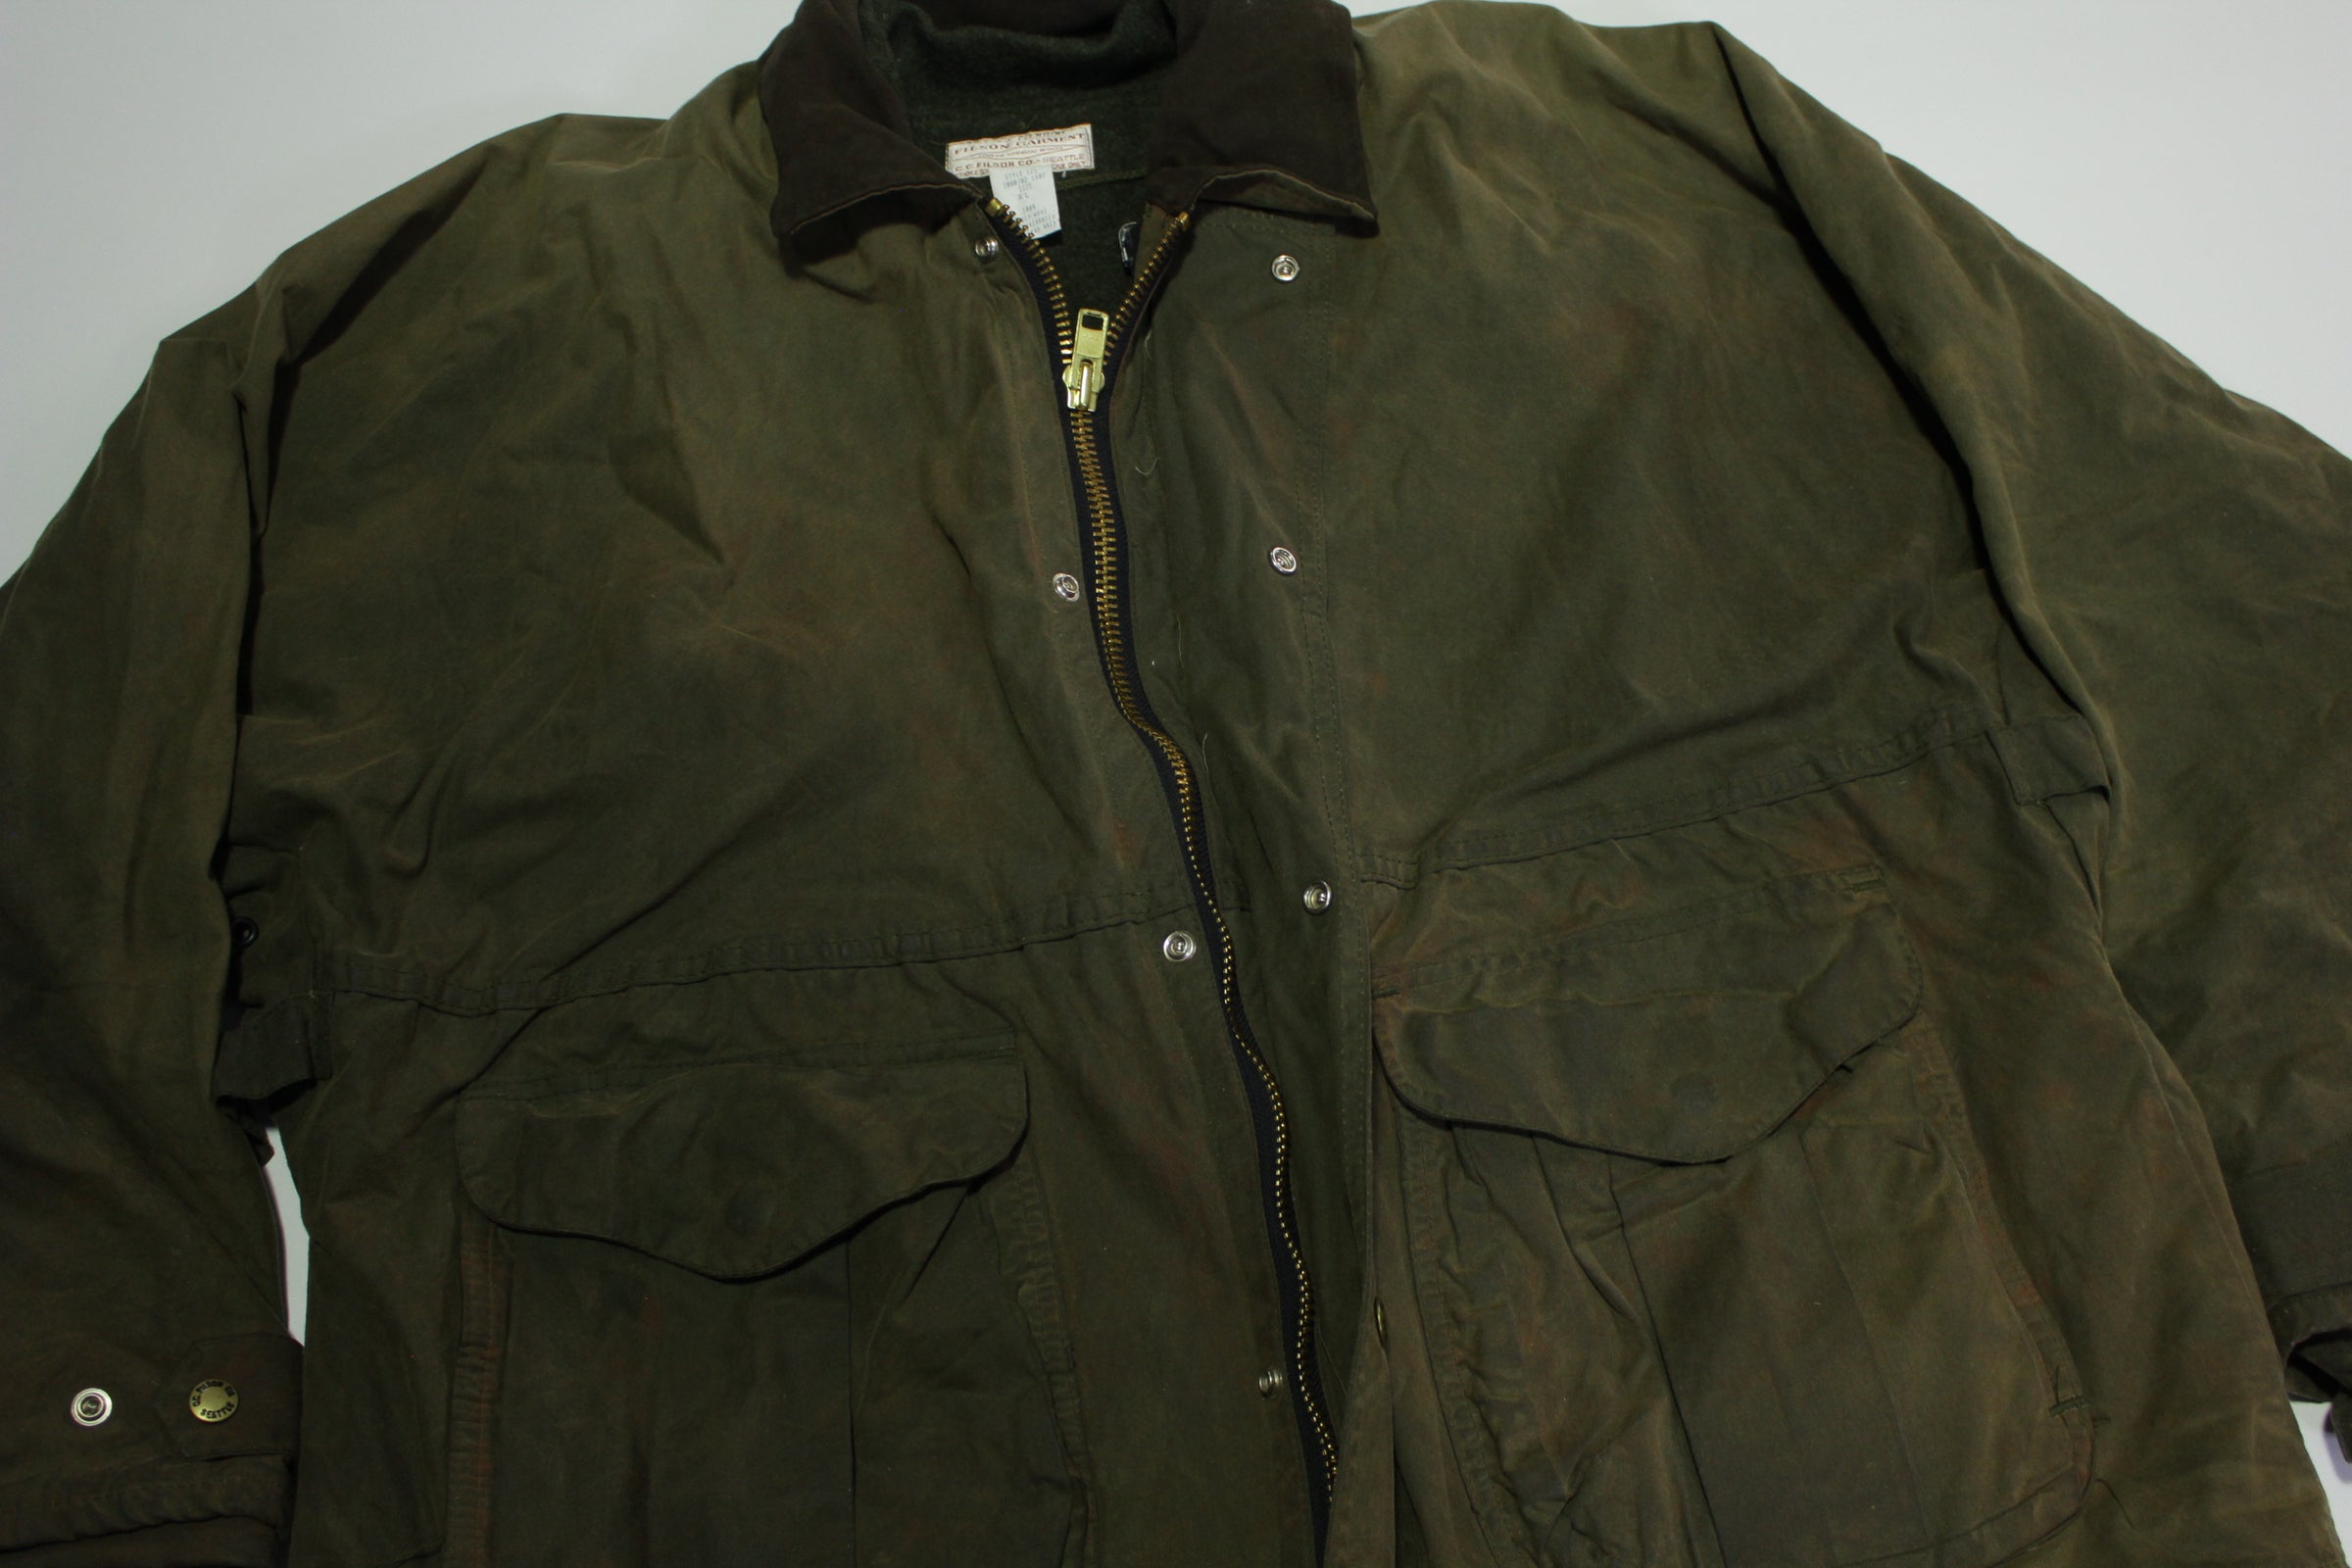 Filson hunting jacket coat - Gem